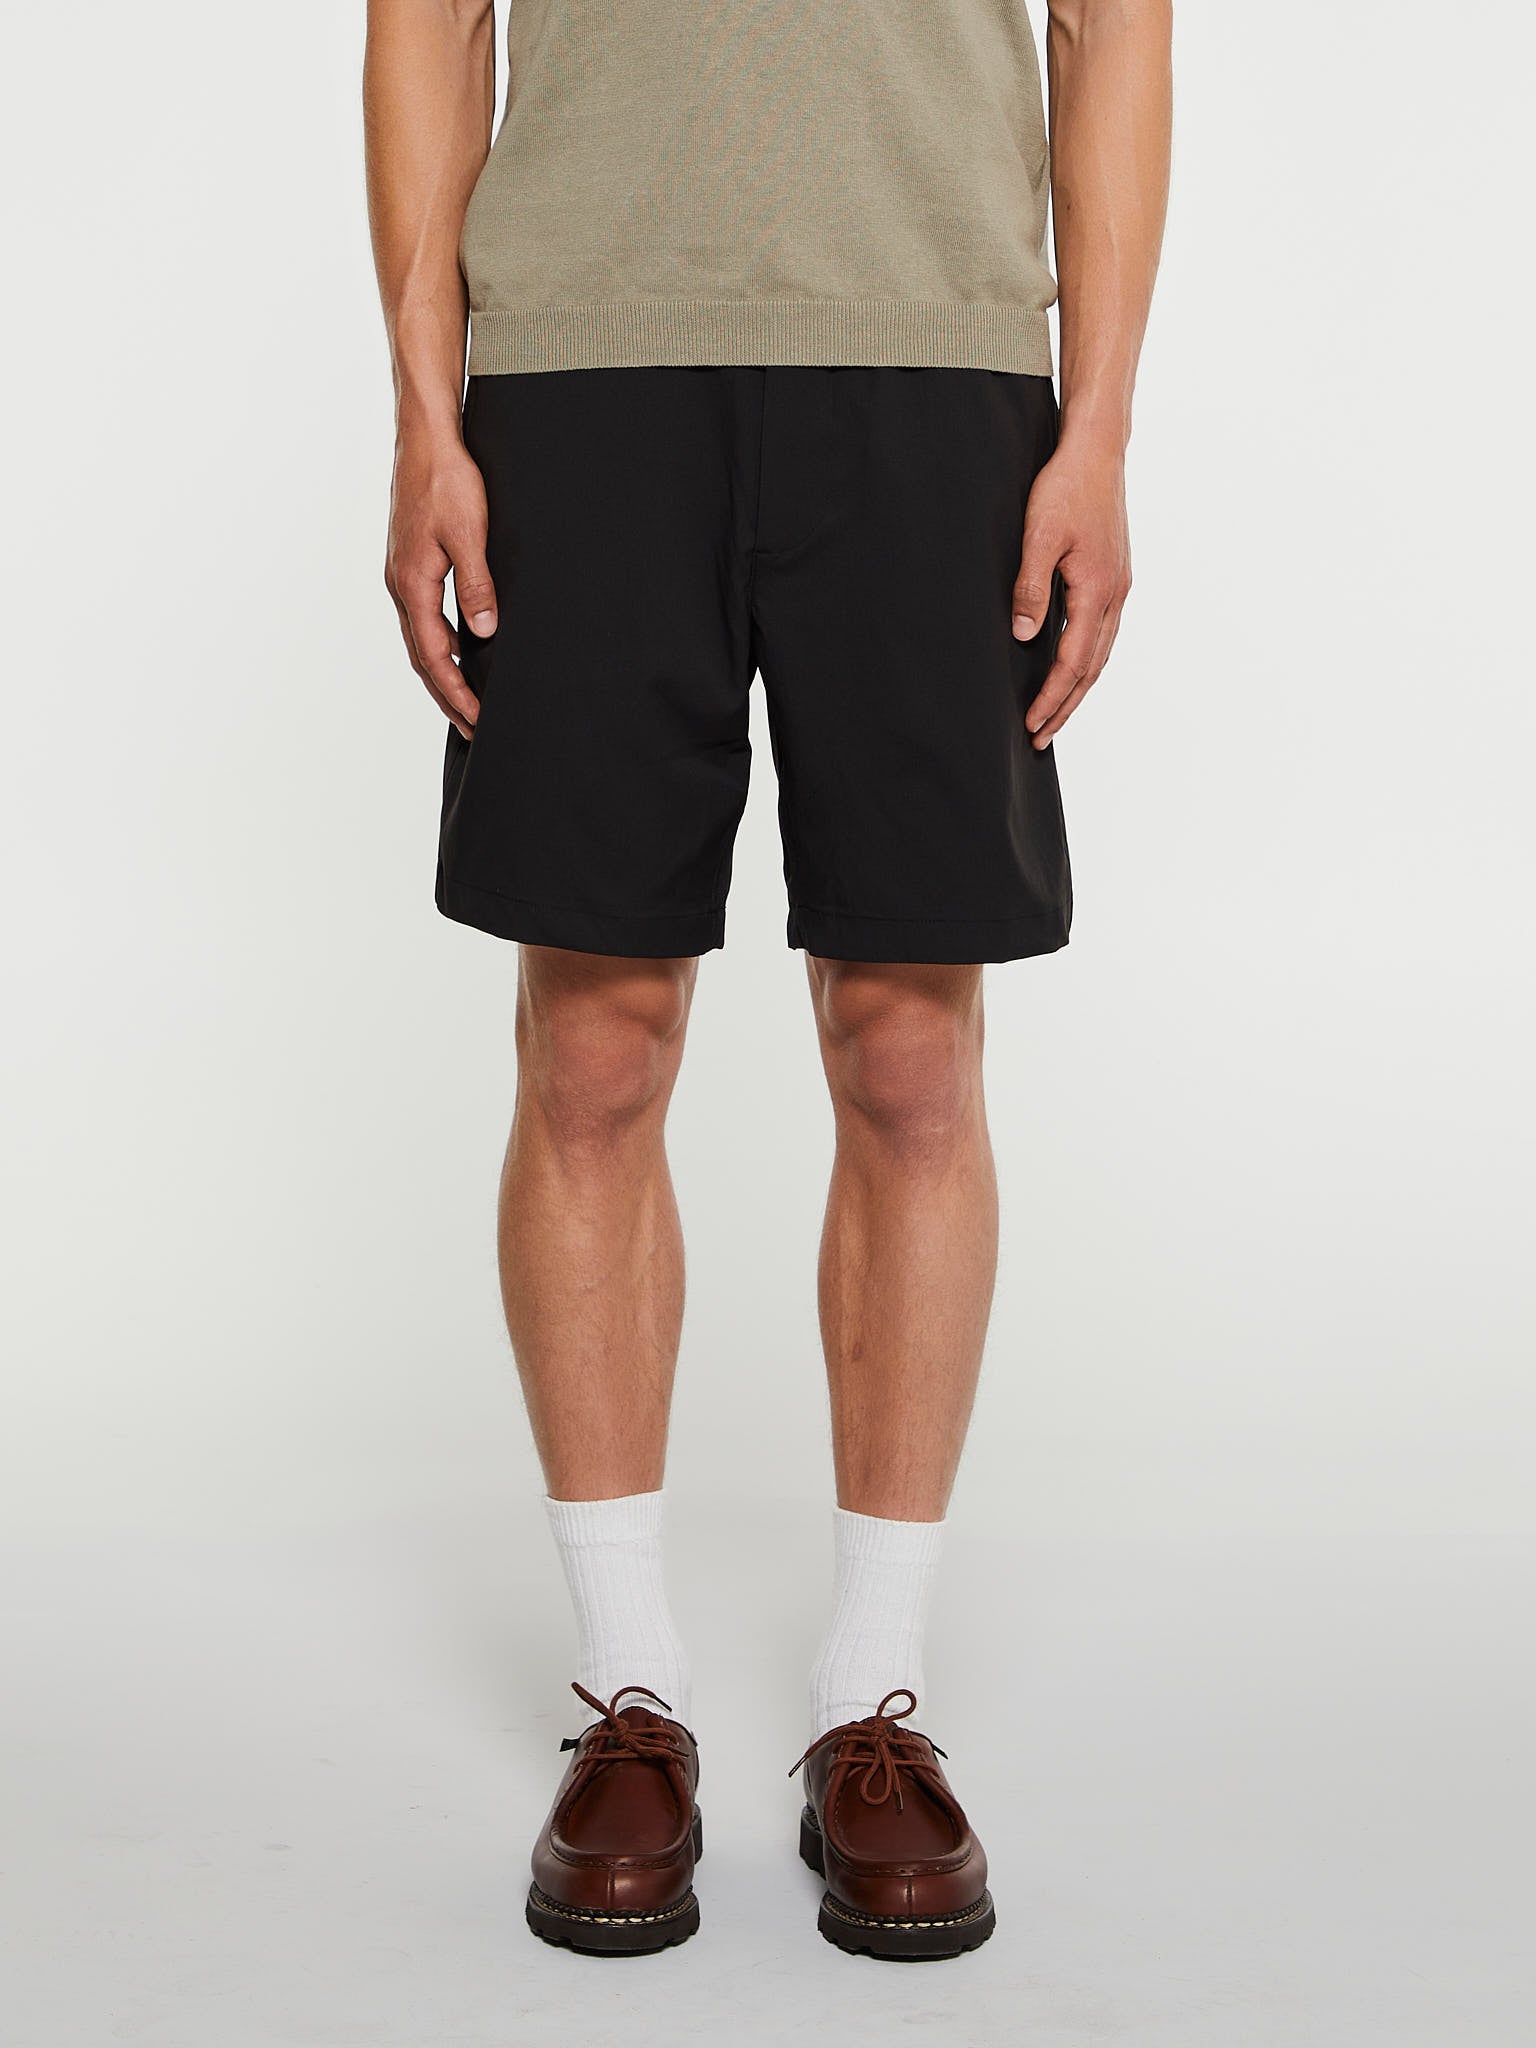 Ezra Solotex Shorts in Black